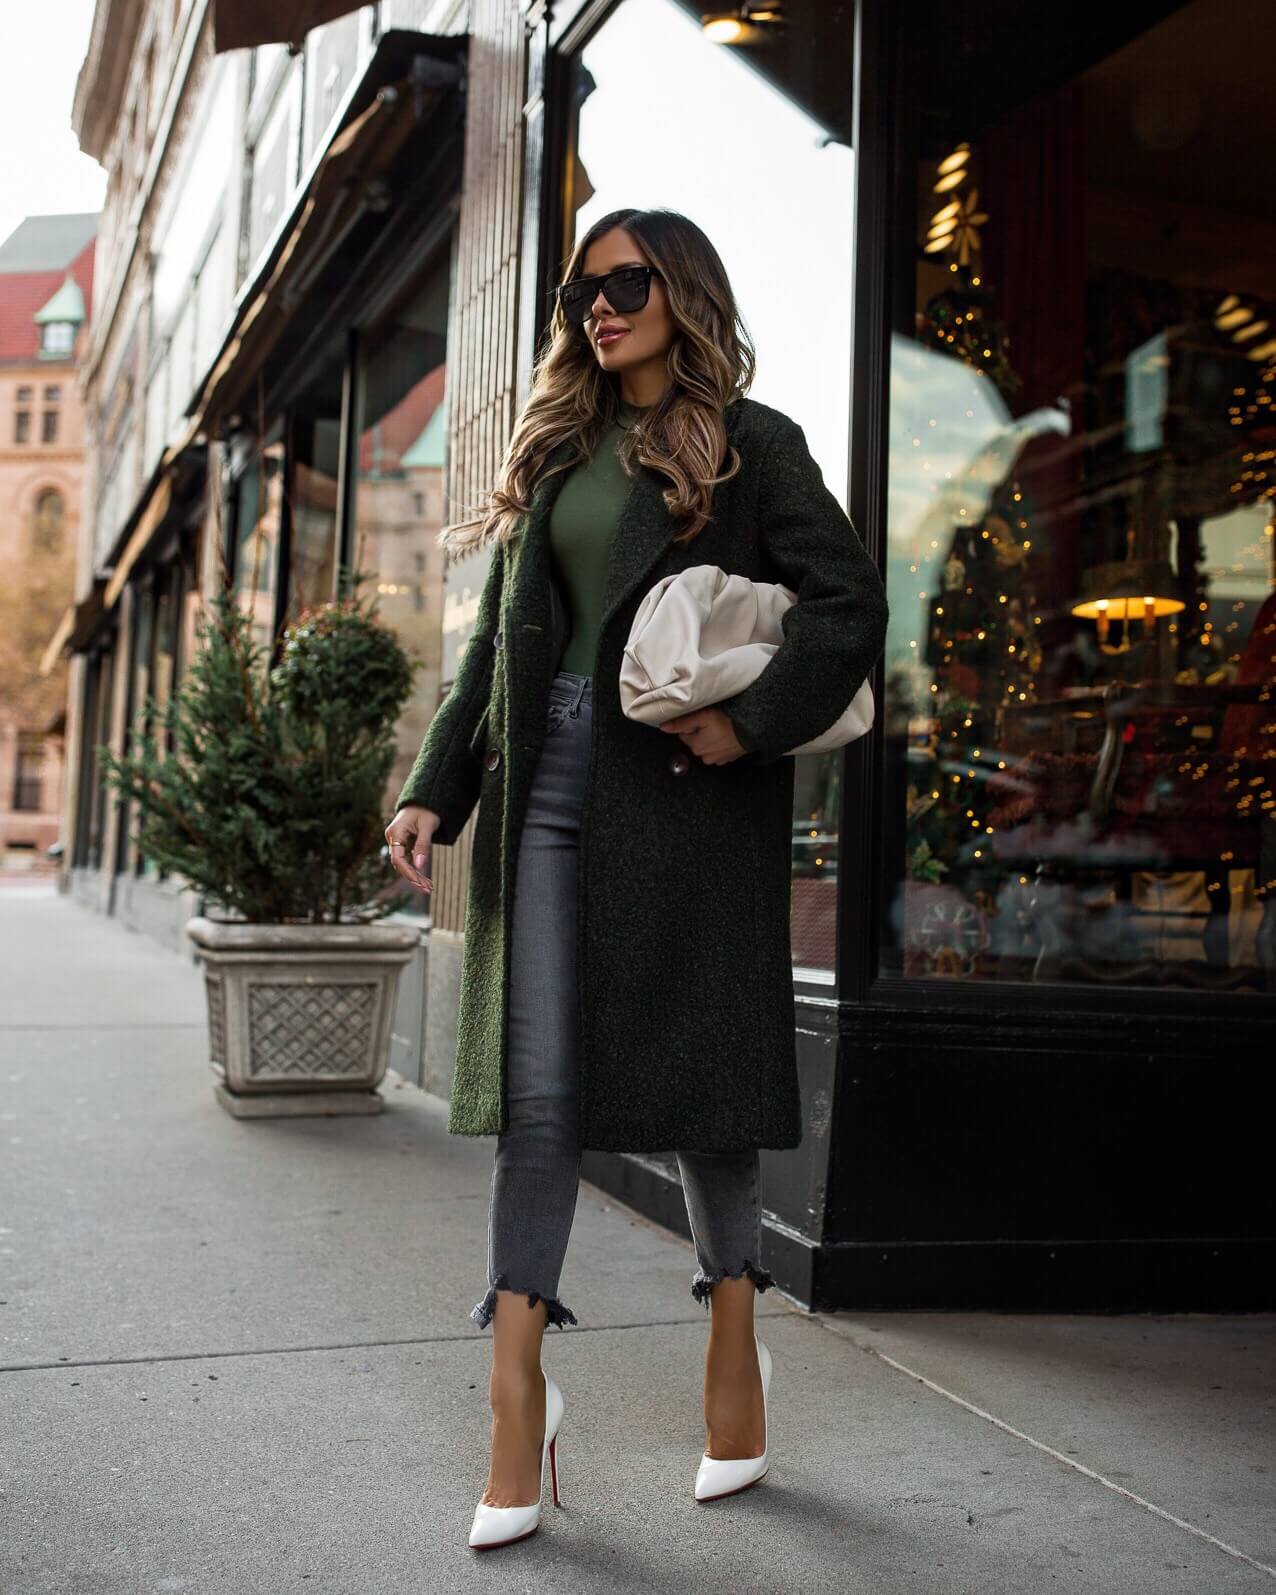 fashion blogger mia mia mine wearing an olive green coat and a bottega veneta bag